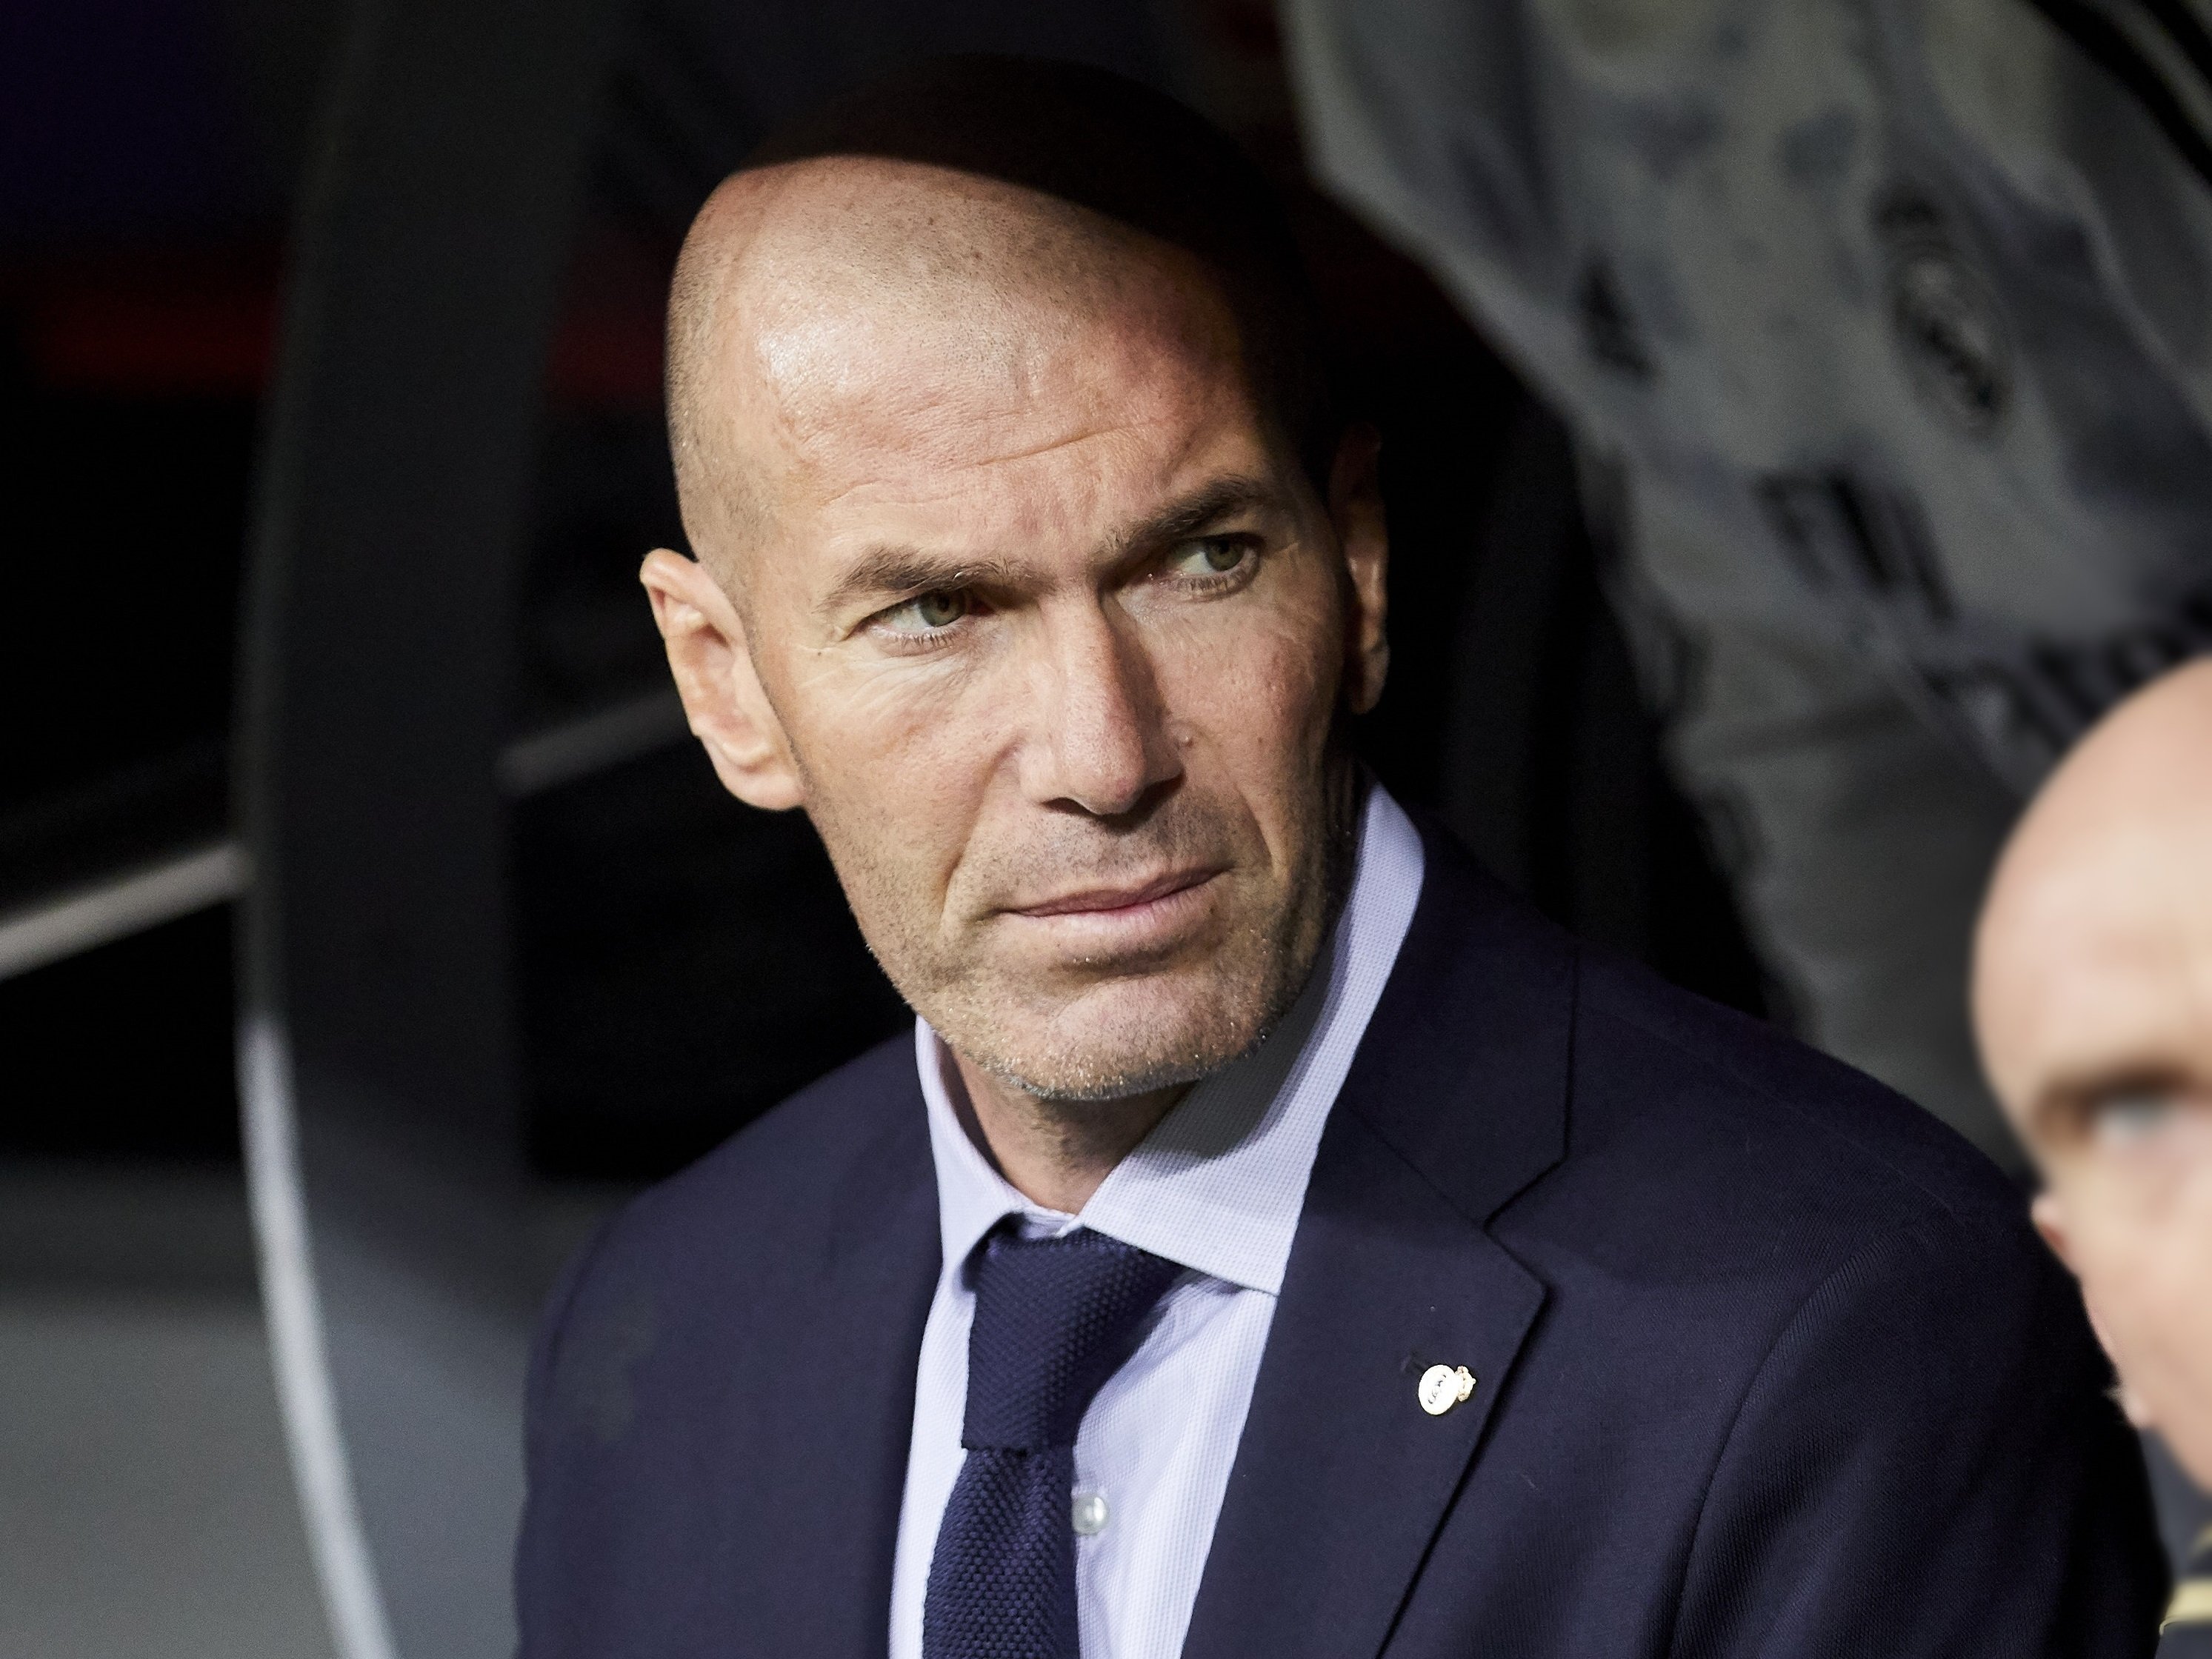 Sorpresa majúscula en conèixer-se el tècnic amb el qual negocia el PSG; ni Zidane, ni Luis Enrique